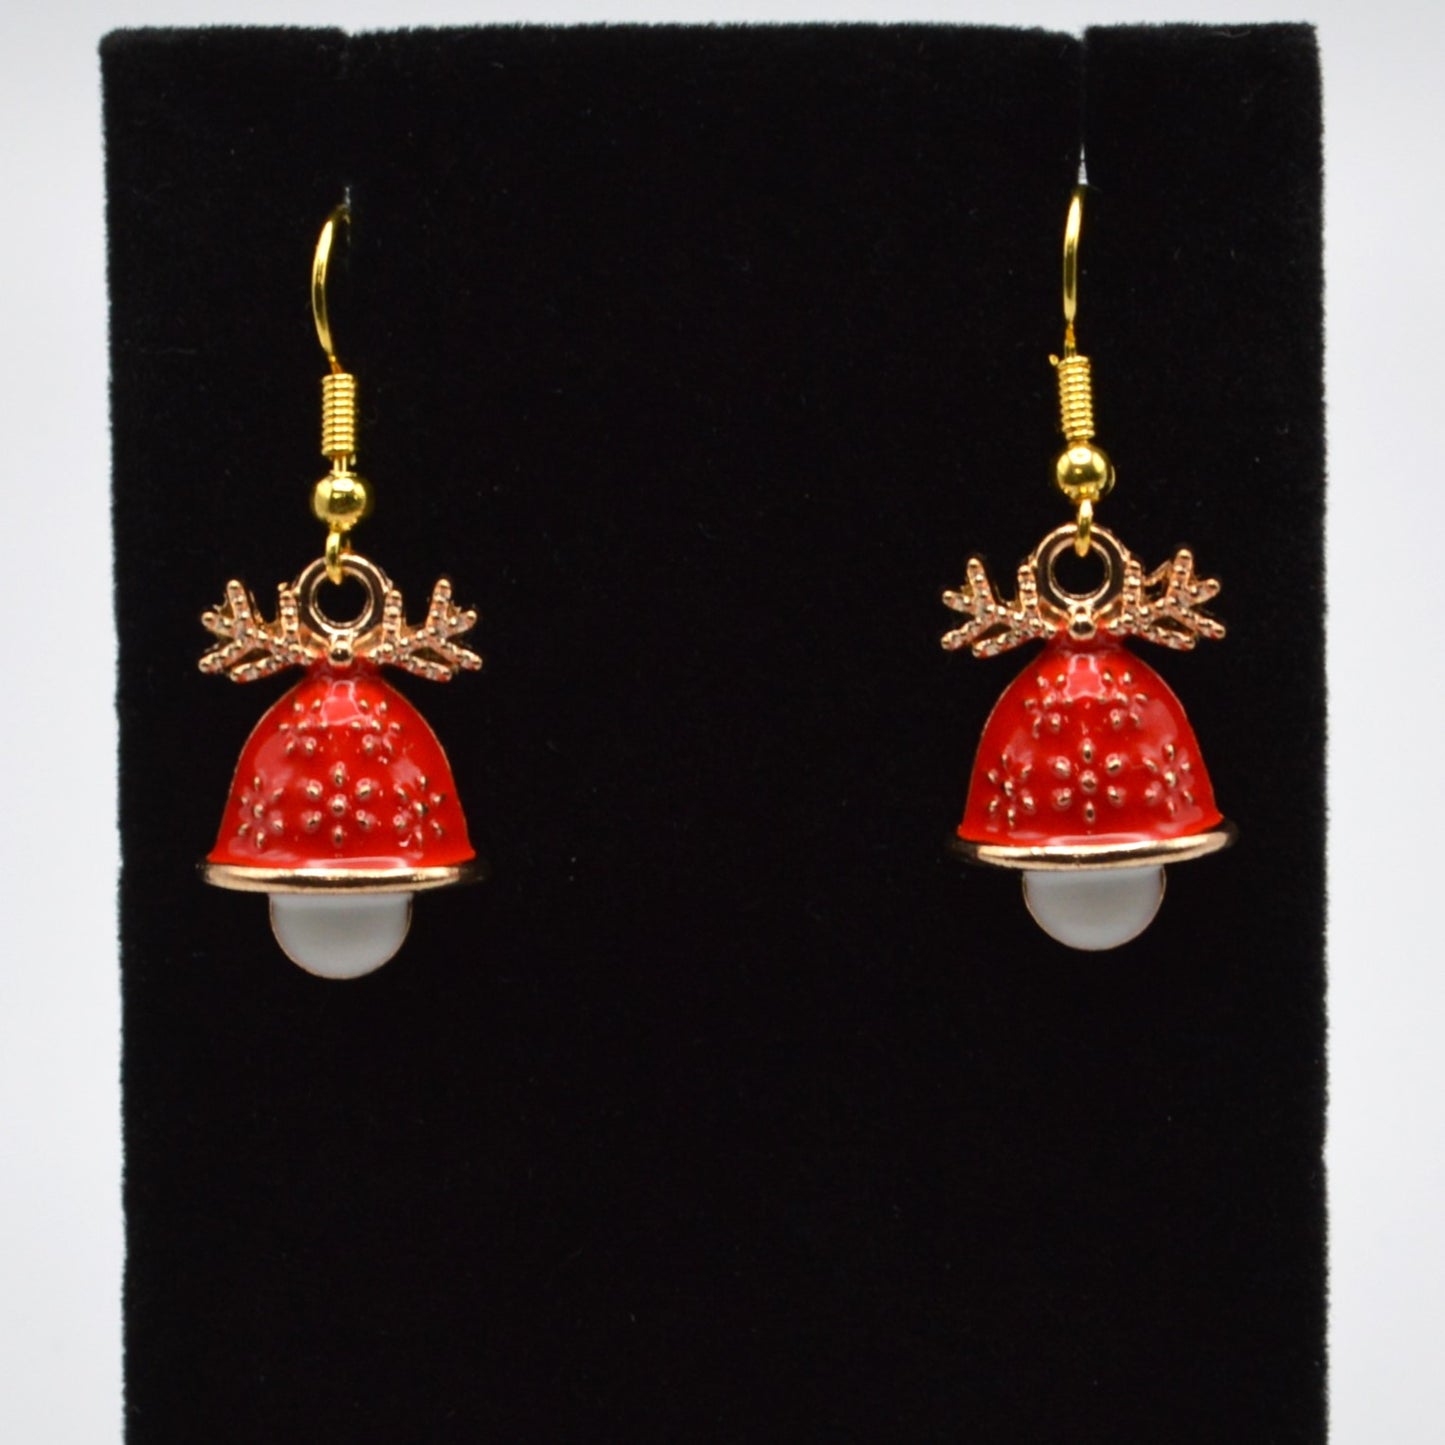 Red Bell Earrings